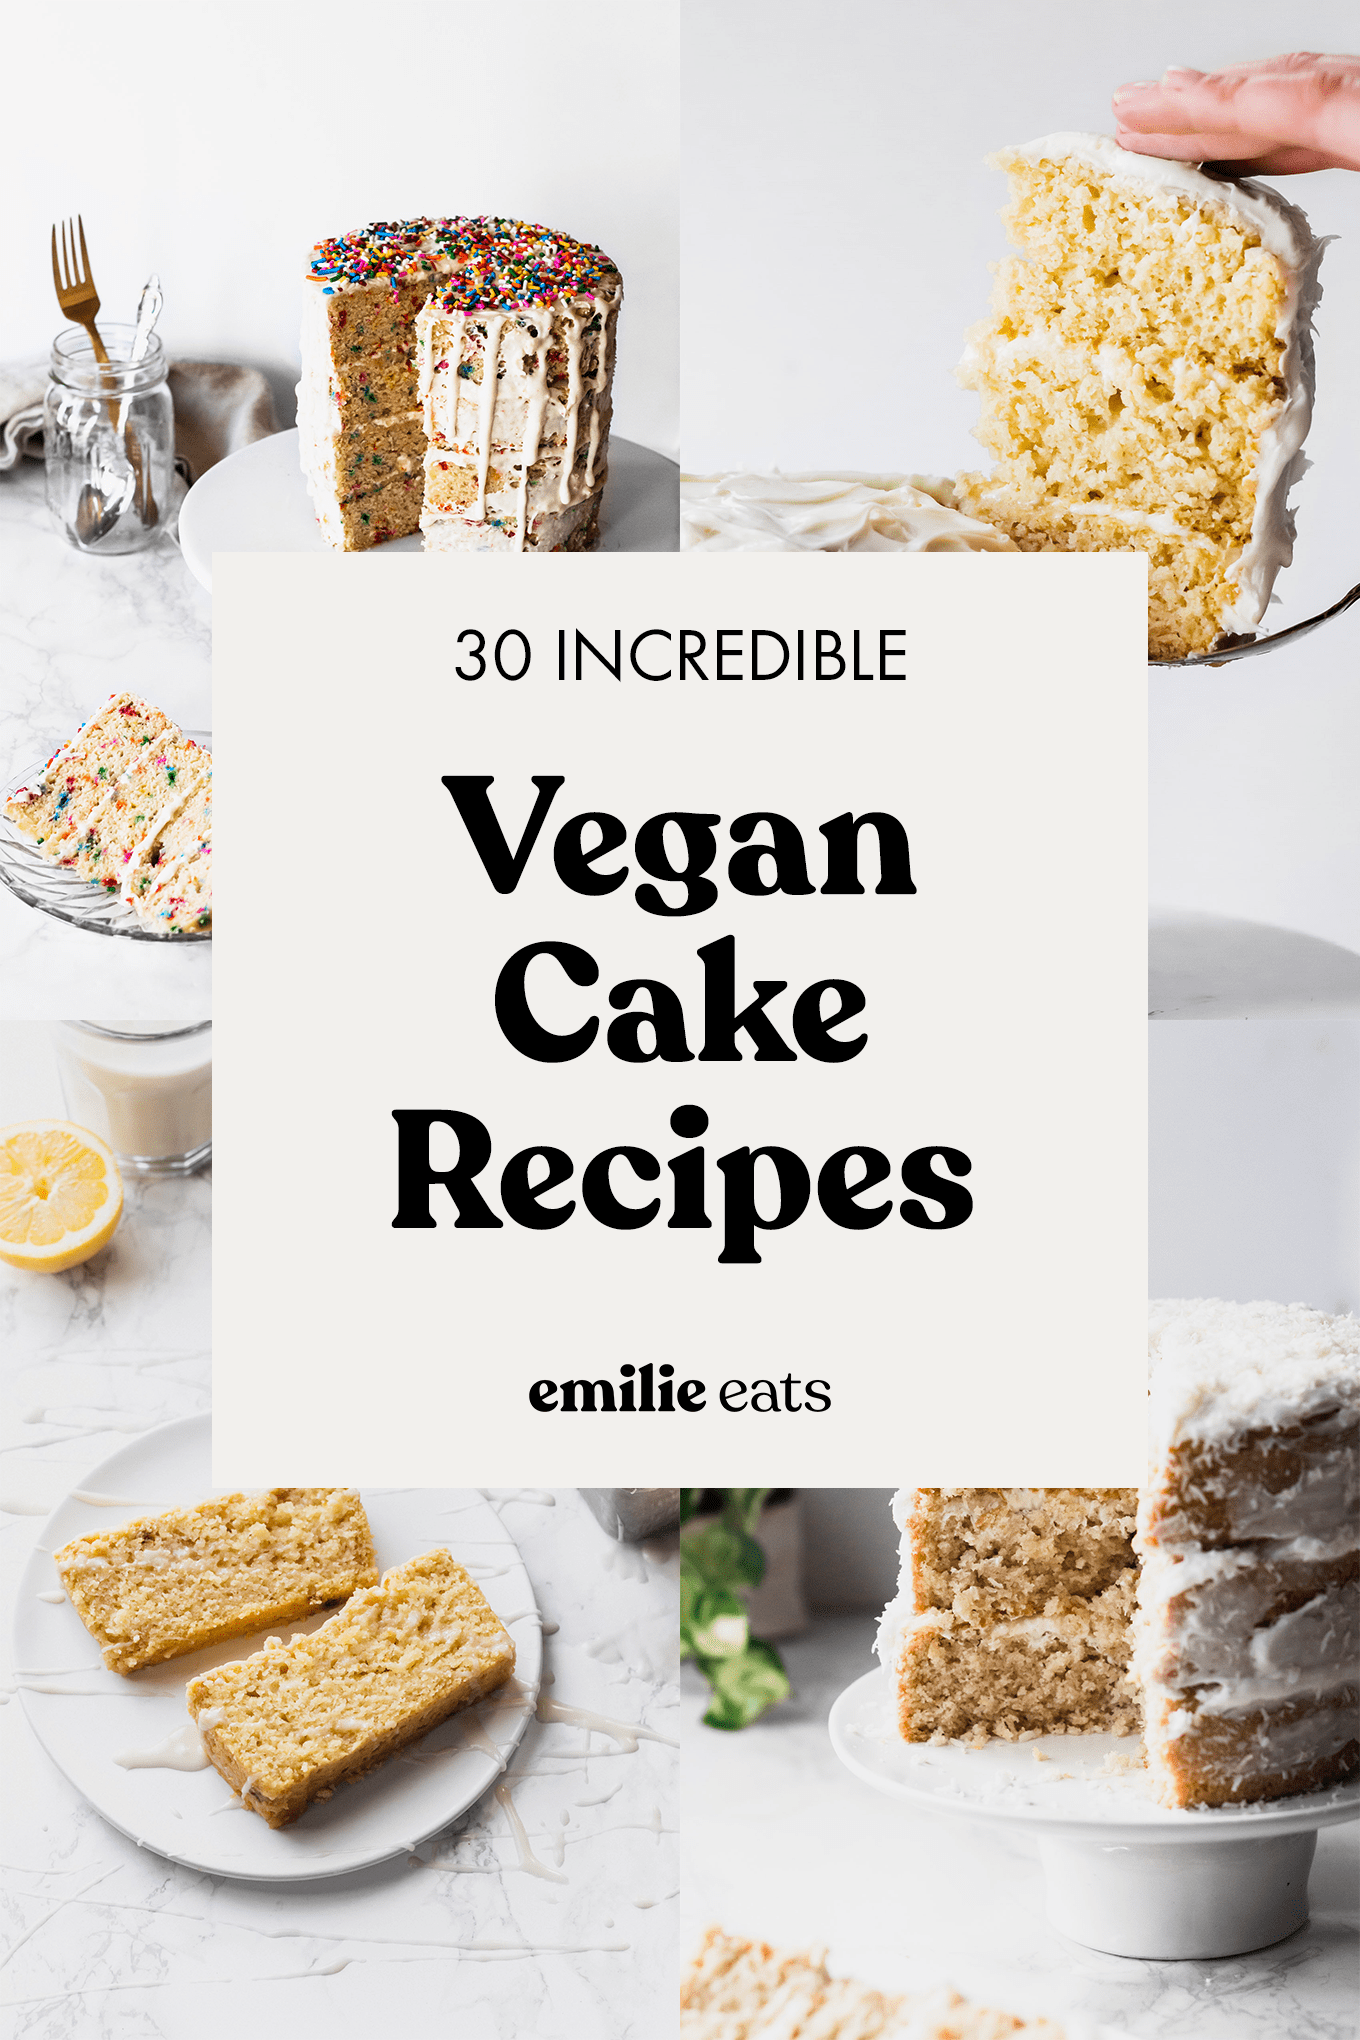 https://www.emilieeats.com/wp-content/uploads/2016/04/30-epic-vegan-cake-recipes-hero.png